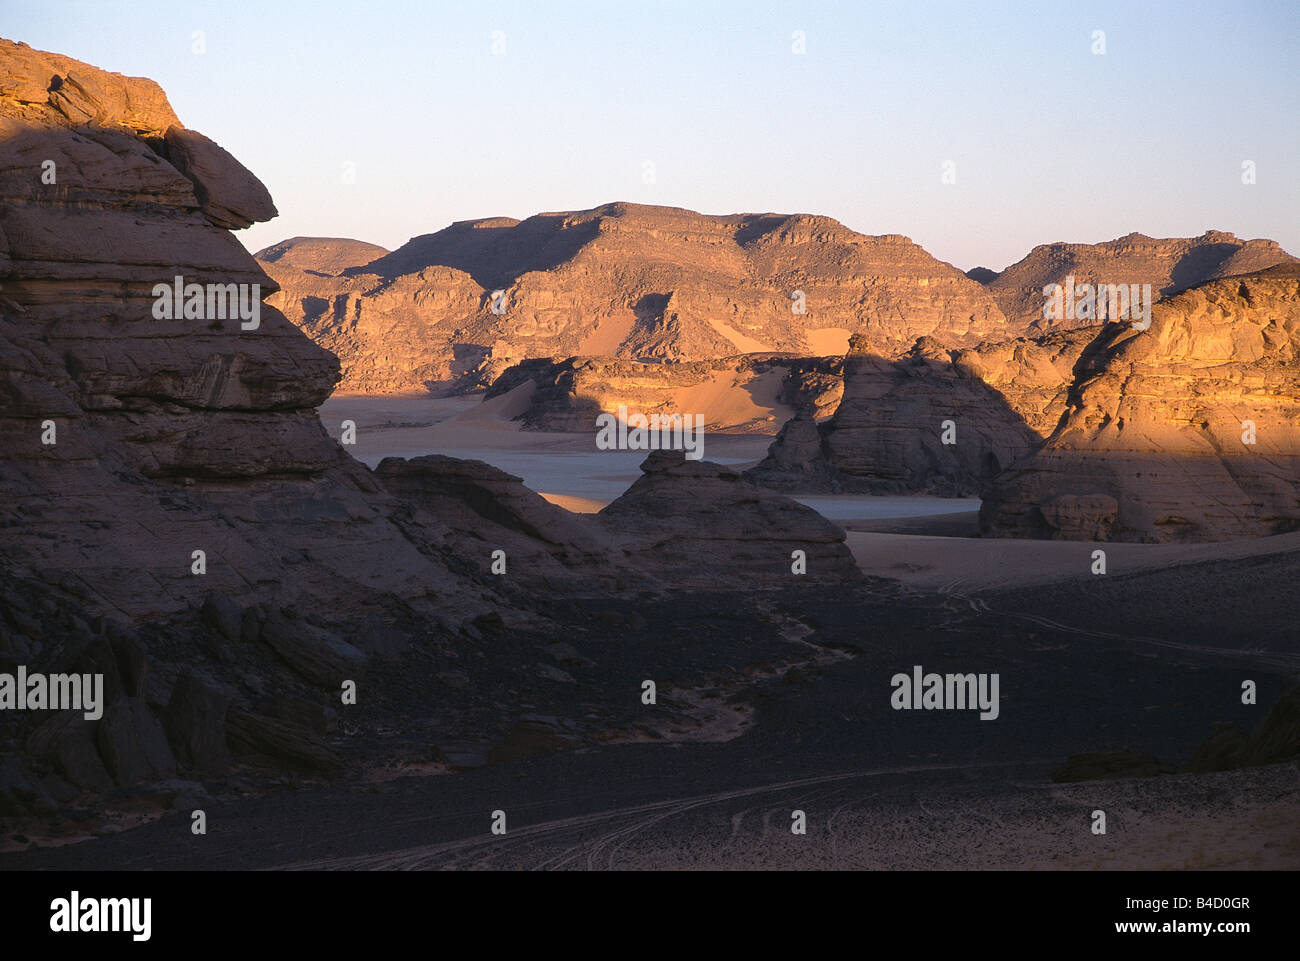 Empty valleys and rocky mountains at Jebel Acacus, Sahara Desert, Libya. Stock Photo